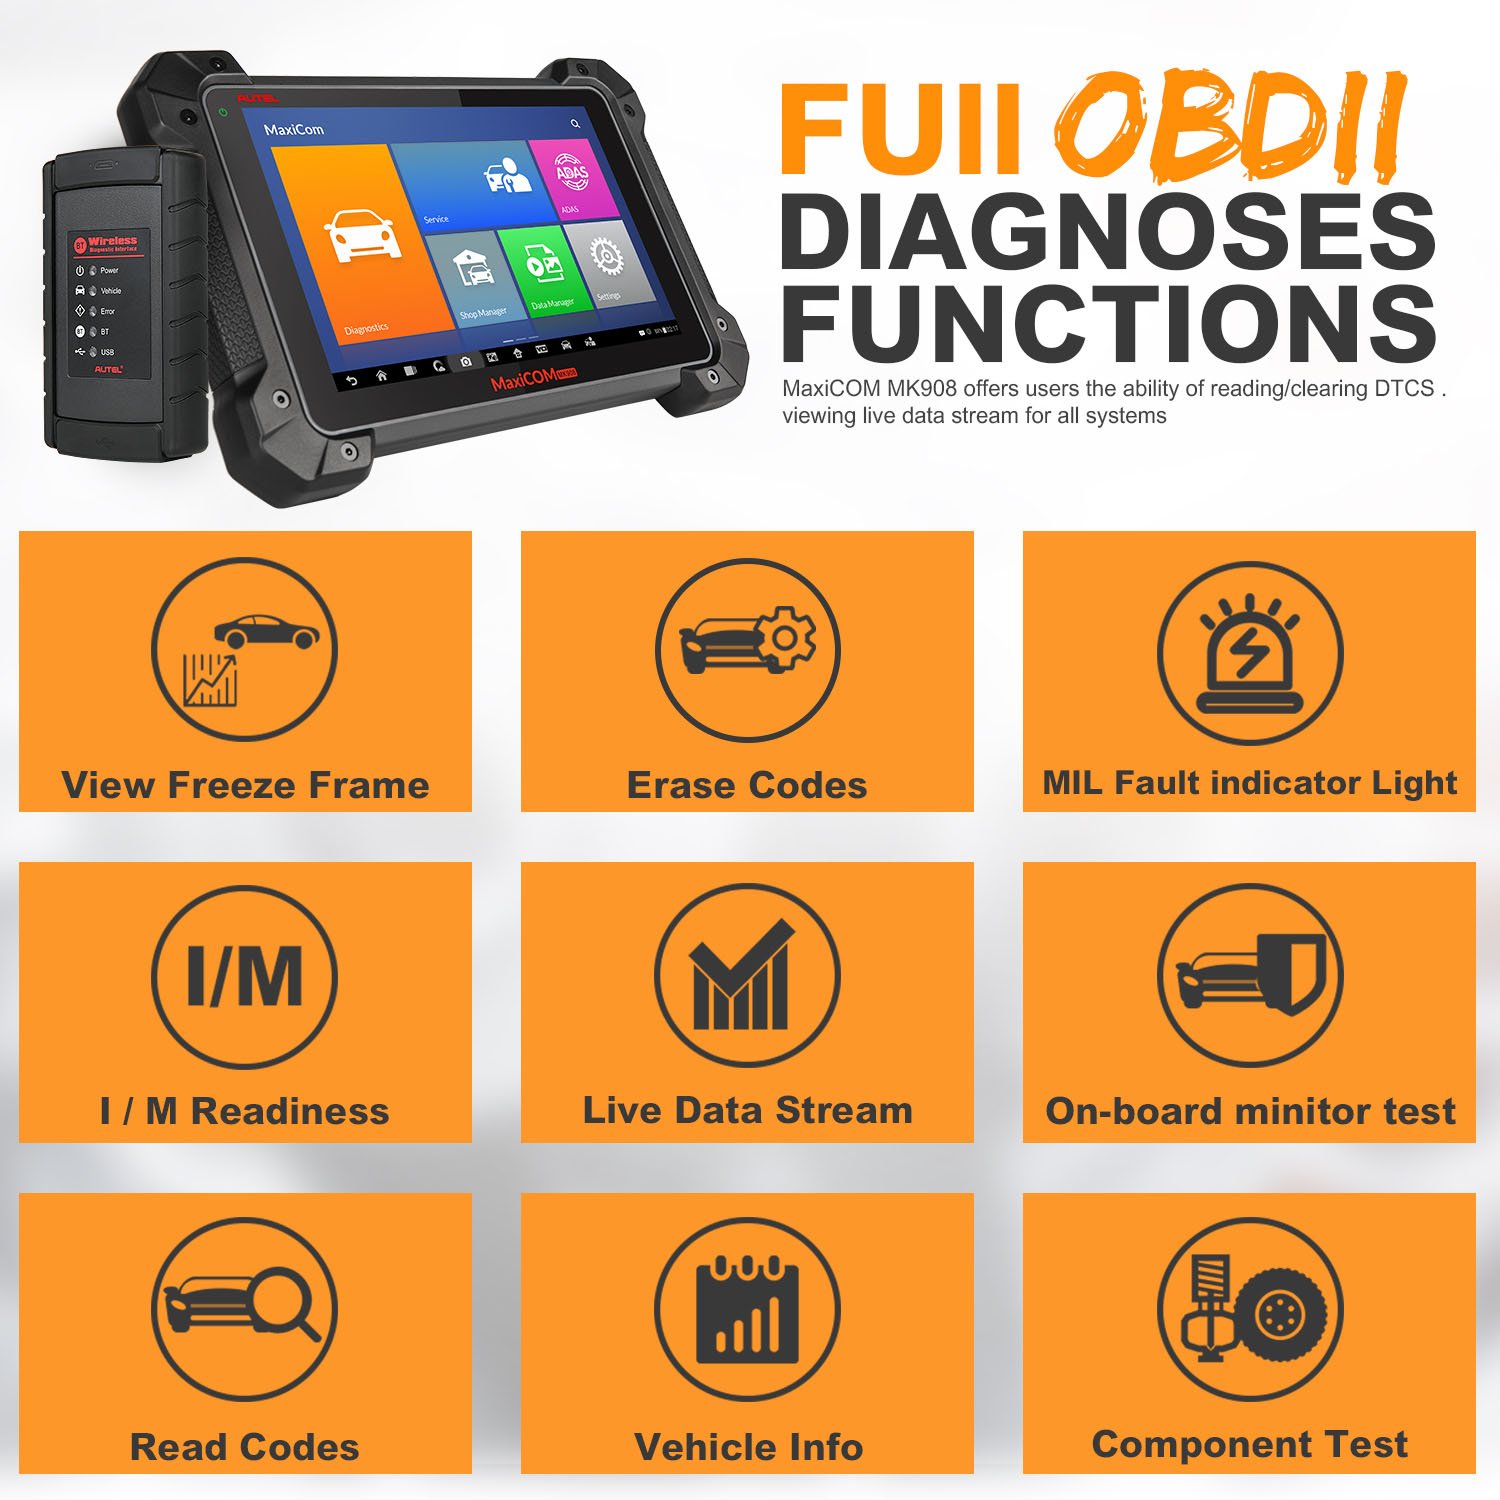 Autel MaxiCOM MK908 full OBDII diagnoses functions